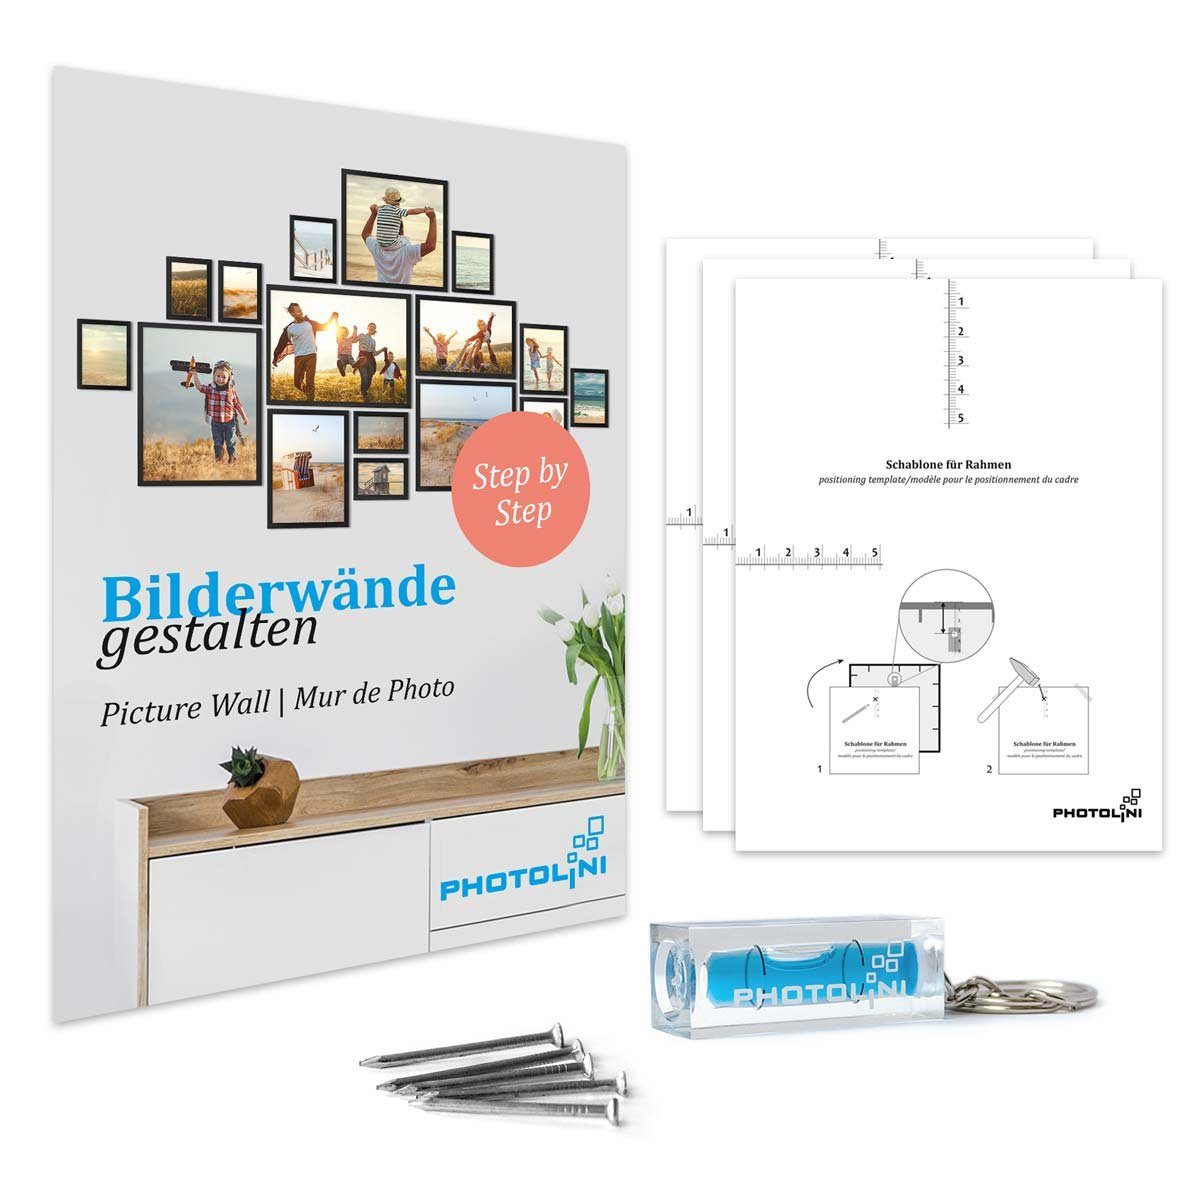 PHOTOLINI Bilderrahmen 3er Set Blau Landhaus-Design Massivholz-Rahmen skandinavischen im